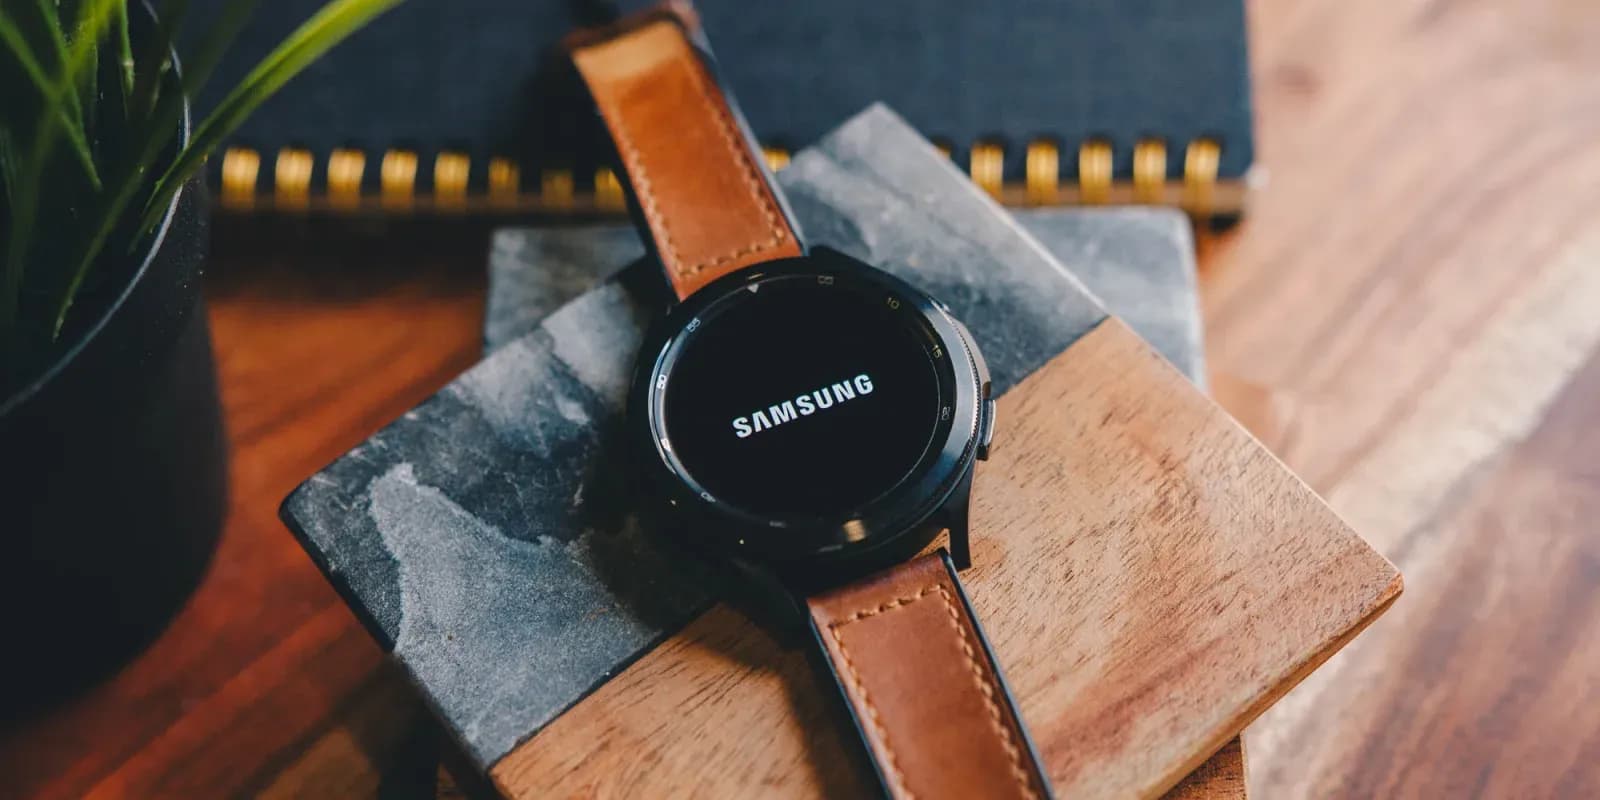 Samsung Galaxy Watch 4’s update is a dual edged sword